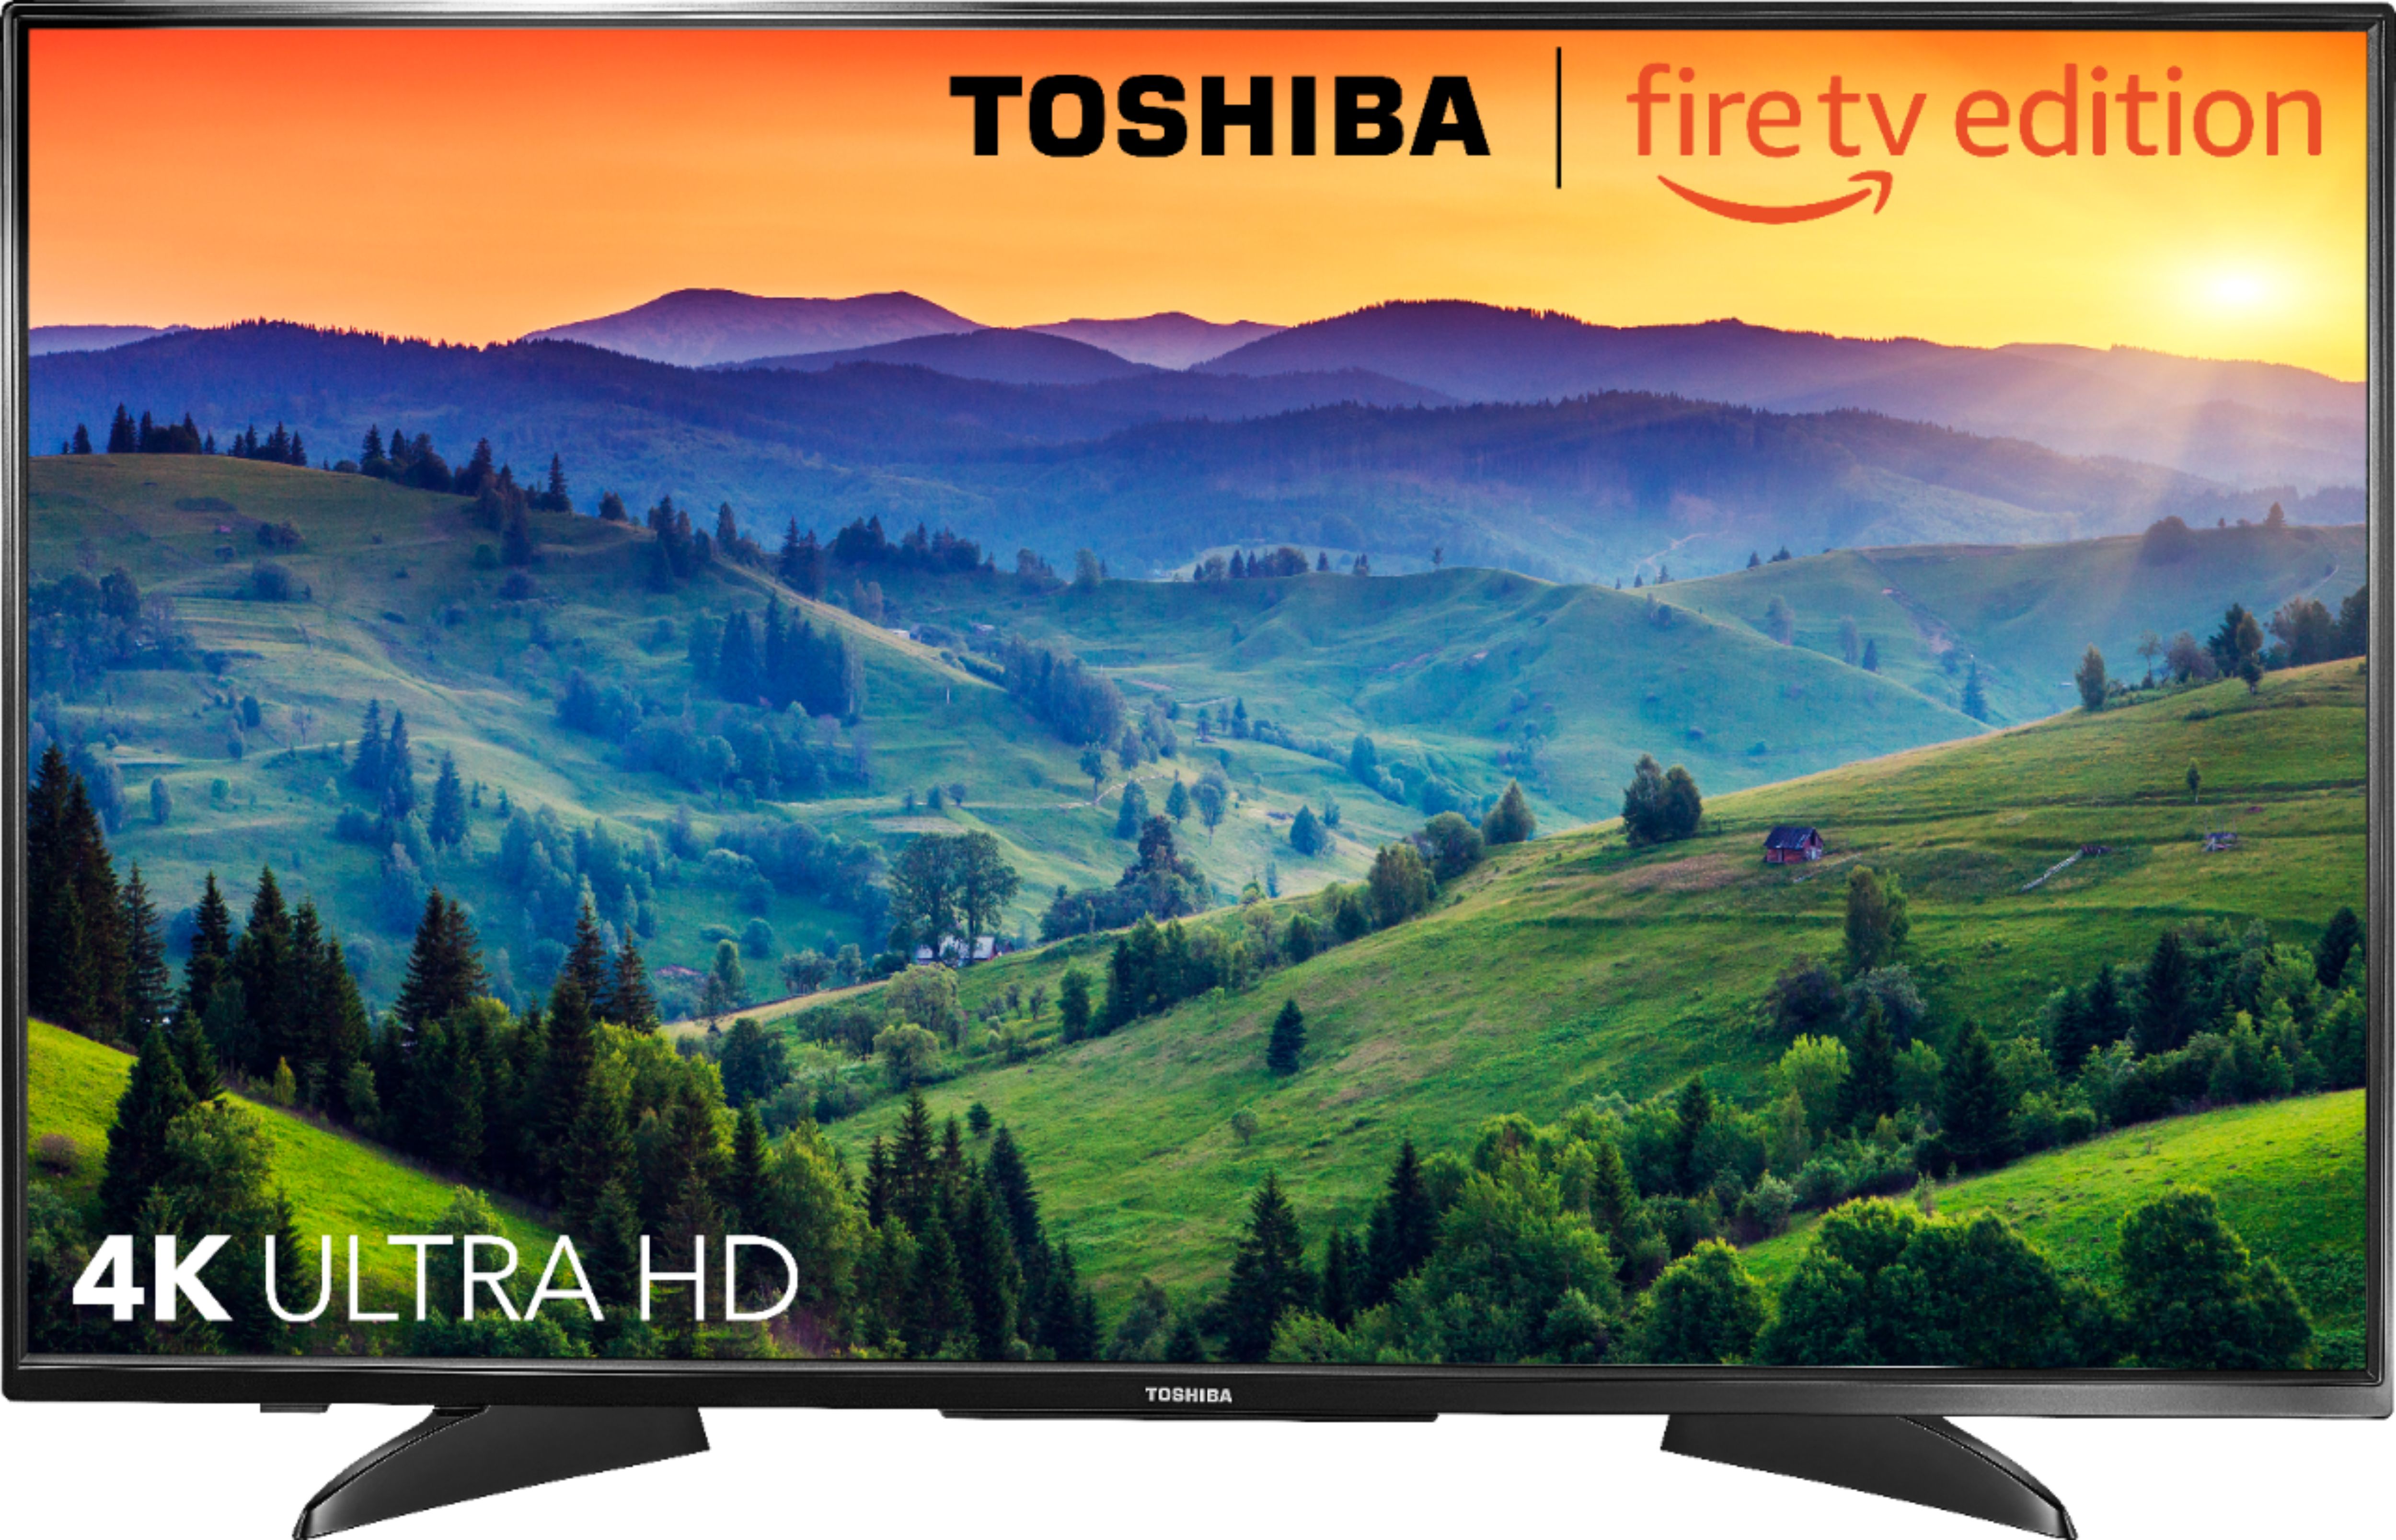 Toshiba 43-inch Smart TV Fire TV Edition (2020)